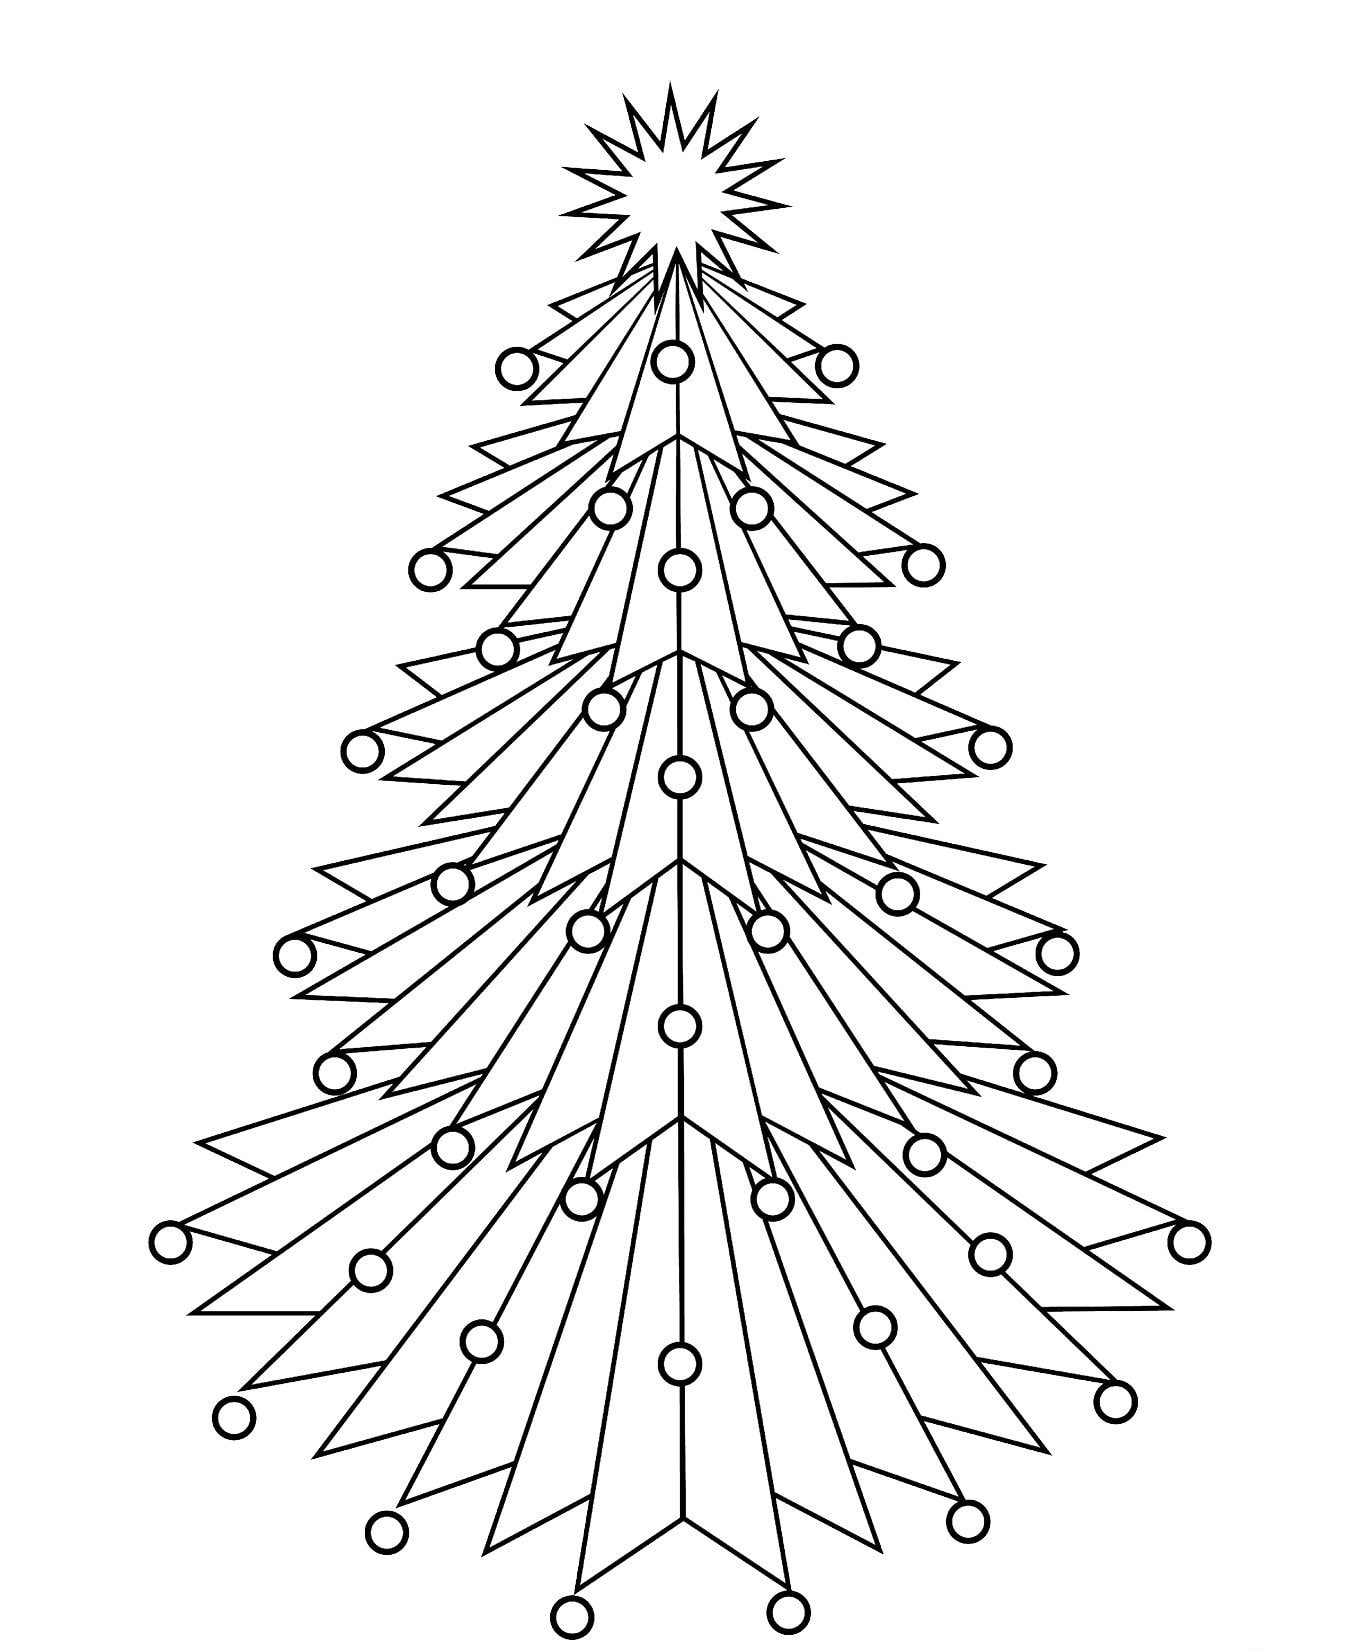 Spiky Angled Christmas Tree Coloring Page